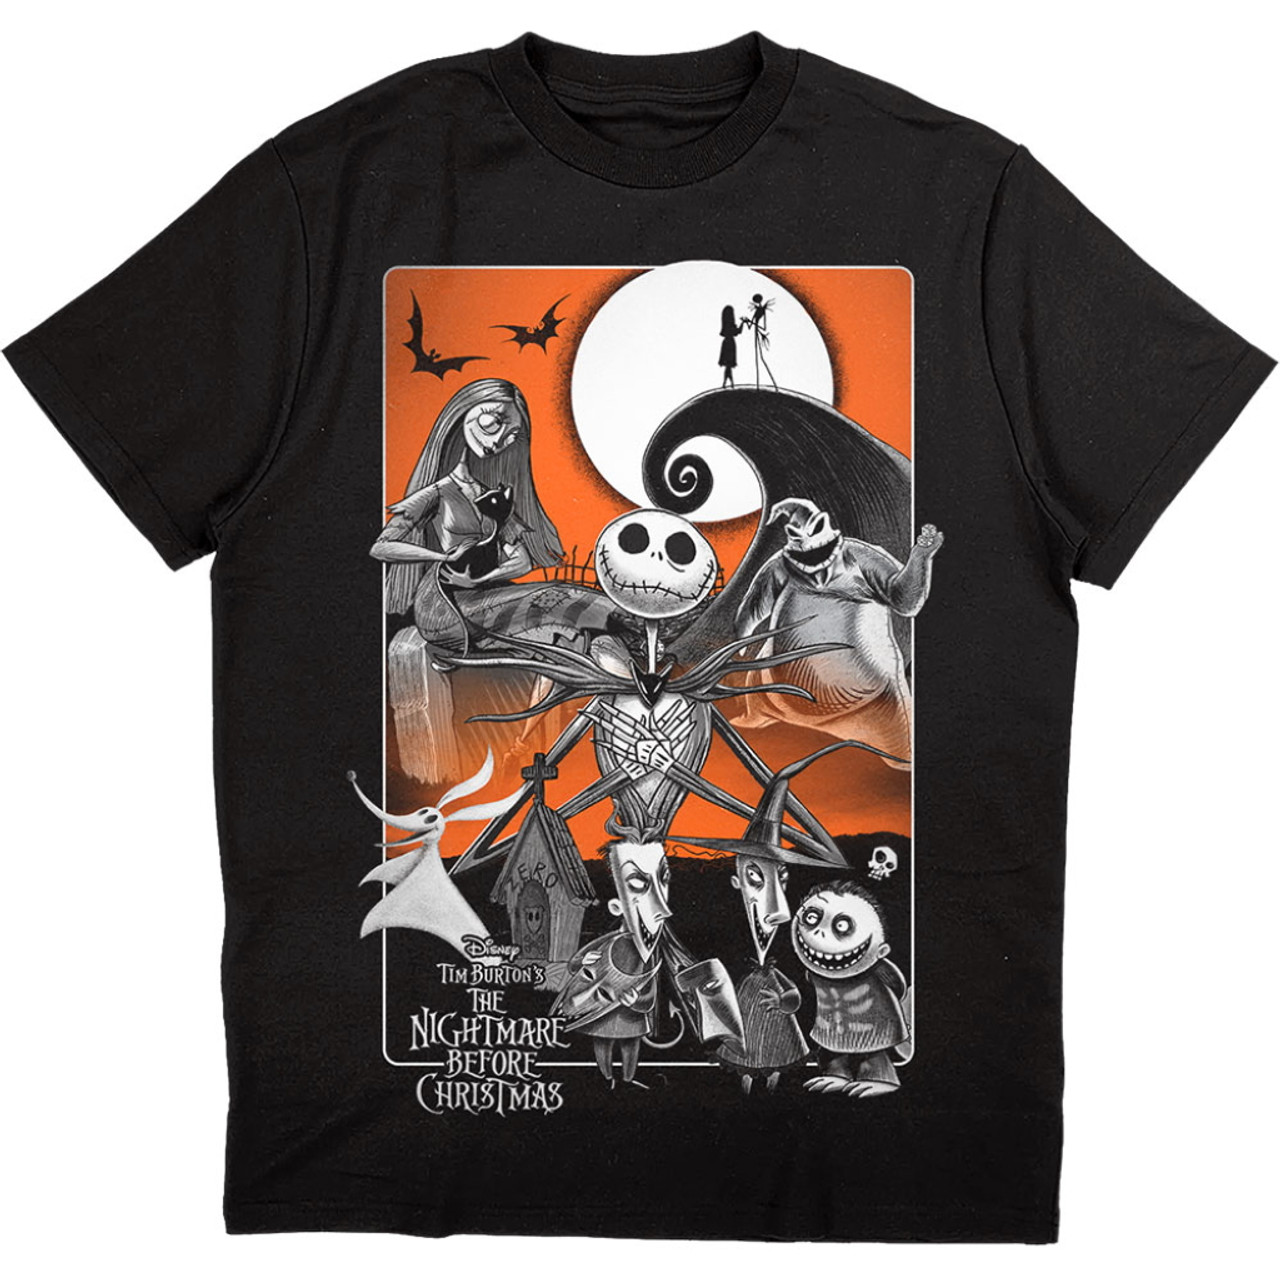 The Nightmare Before Christmas 'Orange Moon' (Black) T-Shirt